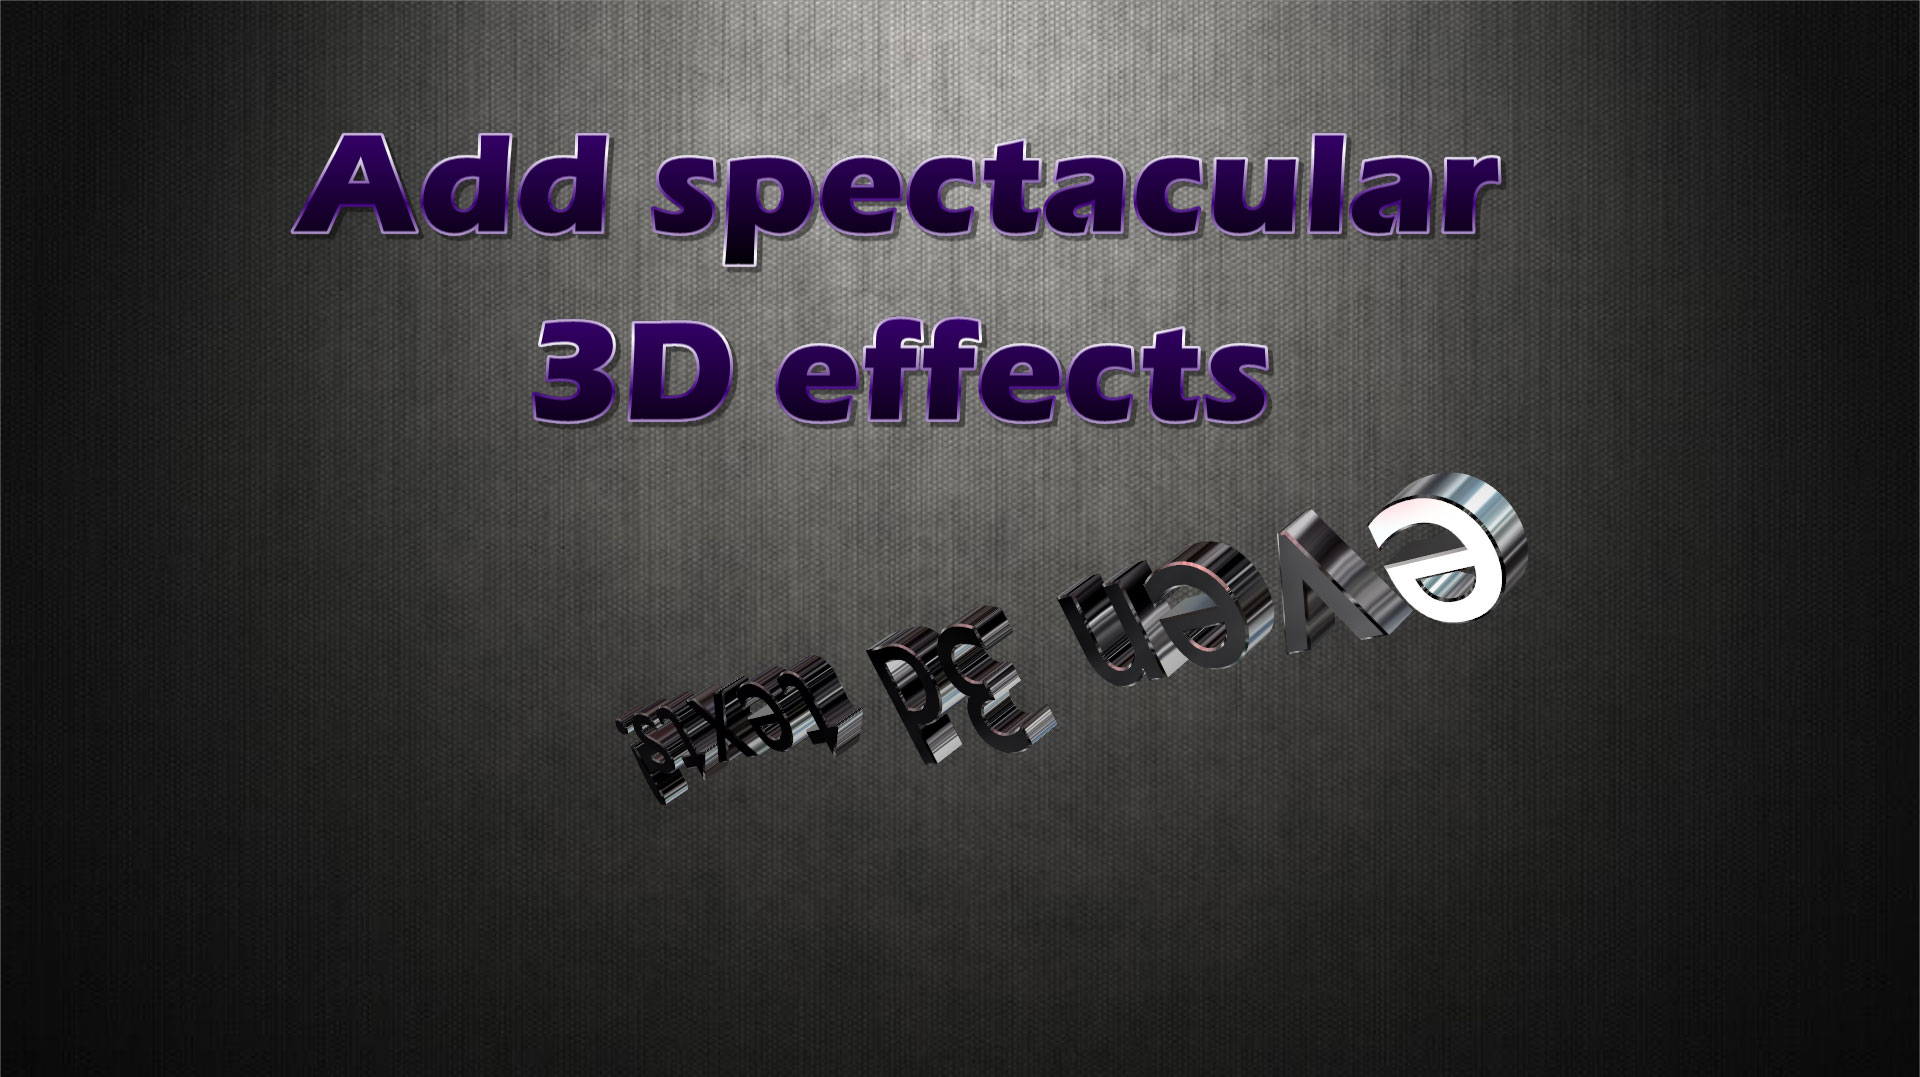 Slide Effect Professional, Design, Photo & Graphics Software Screenshot